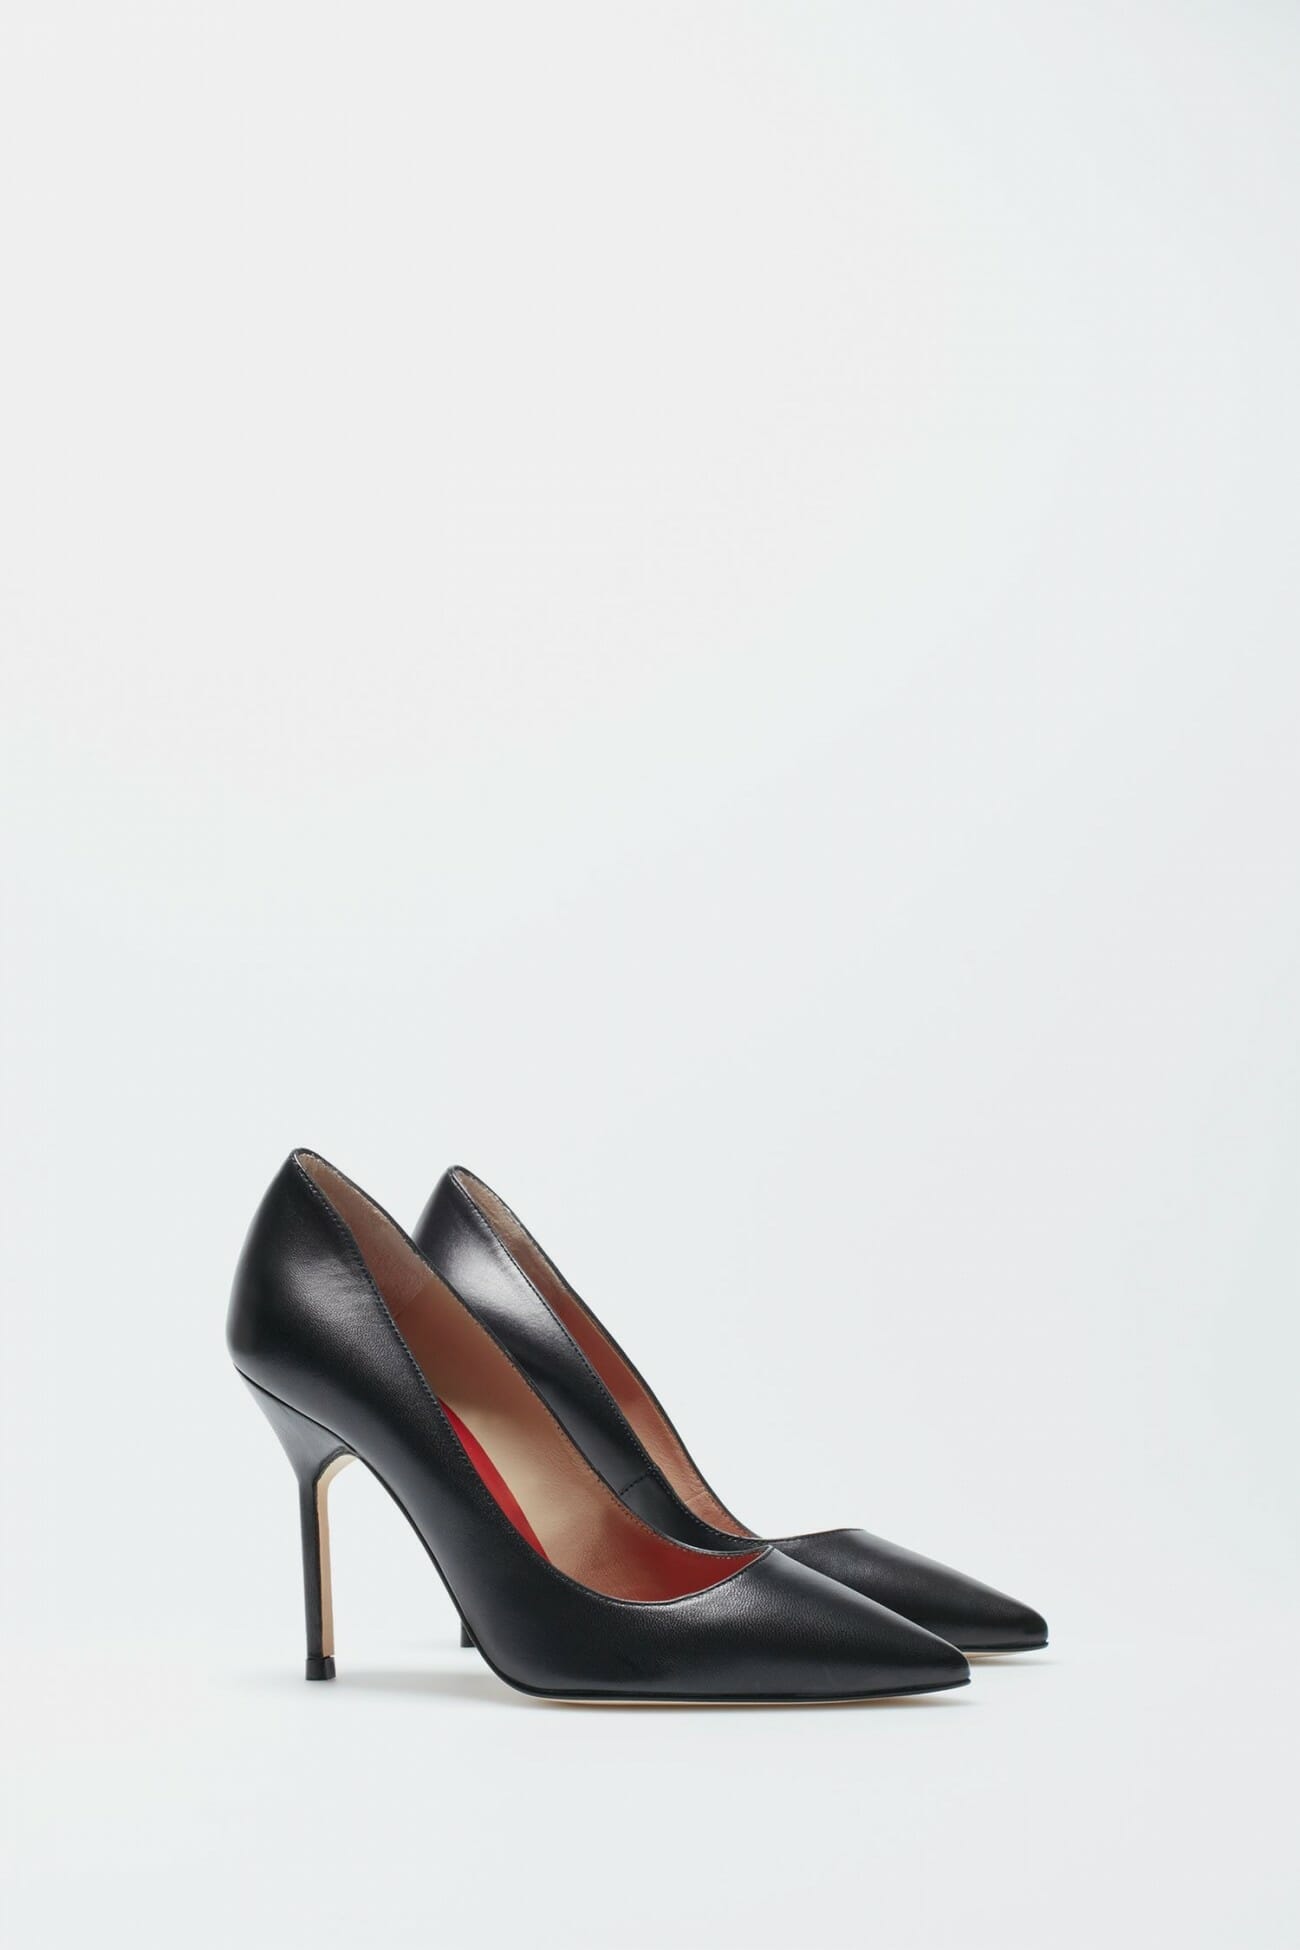 Shoe 13 | Carolina Herrera